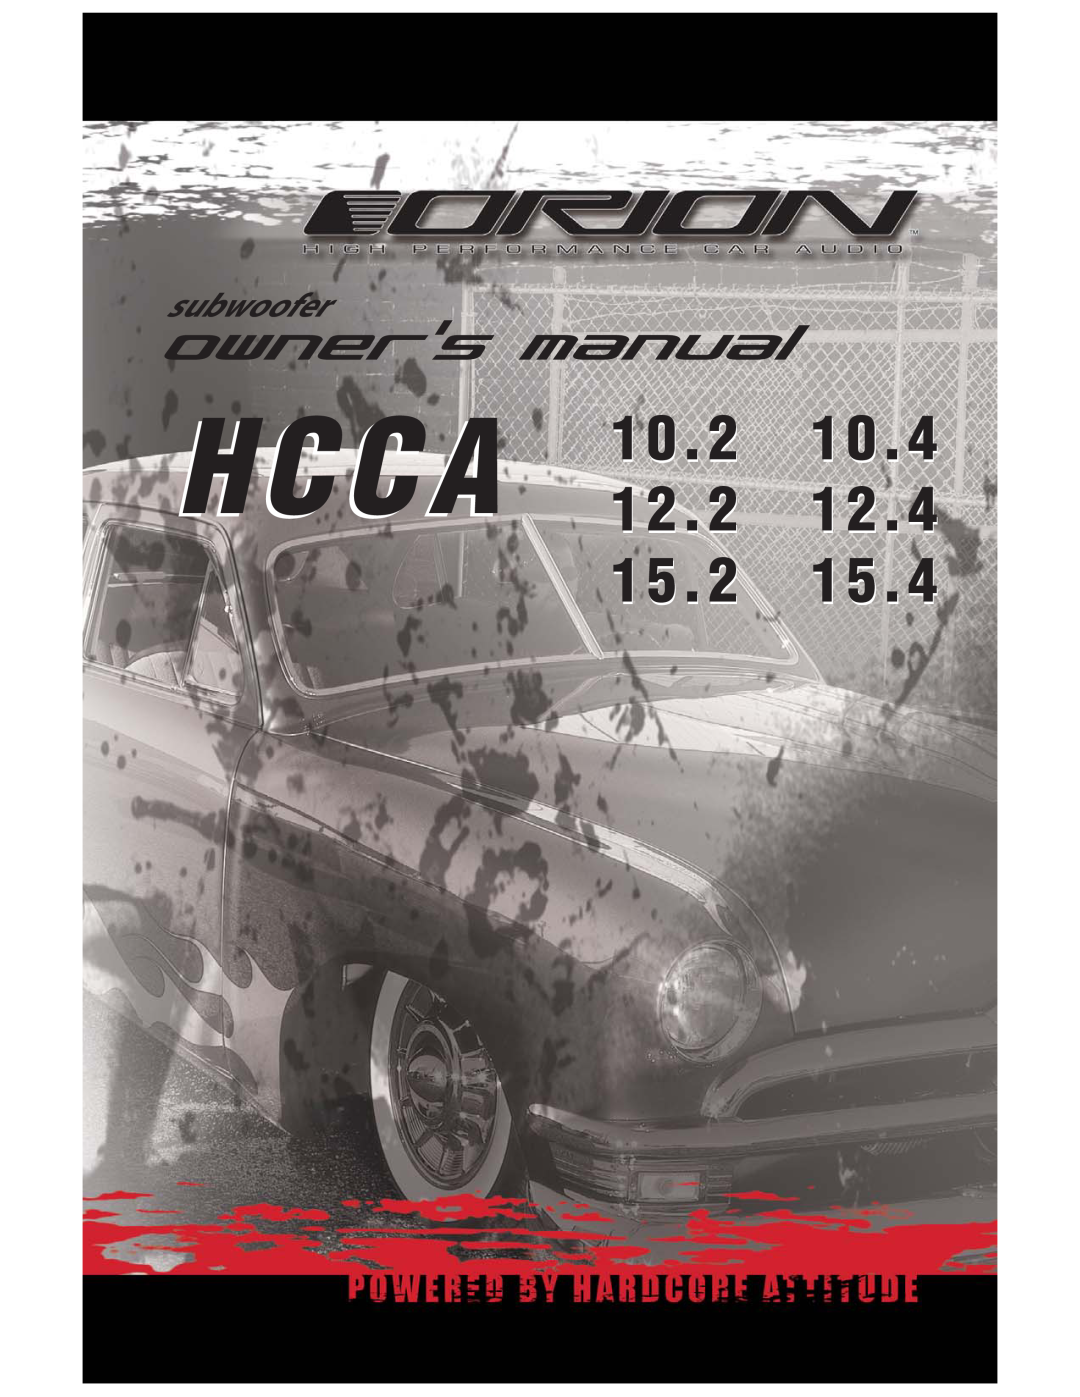 Orion Car Audio HCCA 15.2, HCCA 10.2, HCCA 12.2, HCCA 10.4, HCCA 12.04 manual Hcca, 12.4, 15.4, subwoofer 